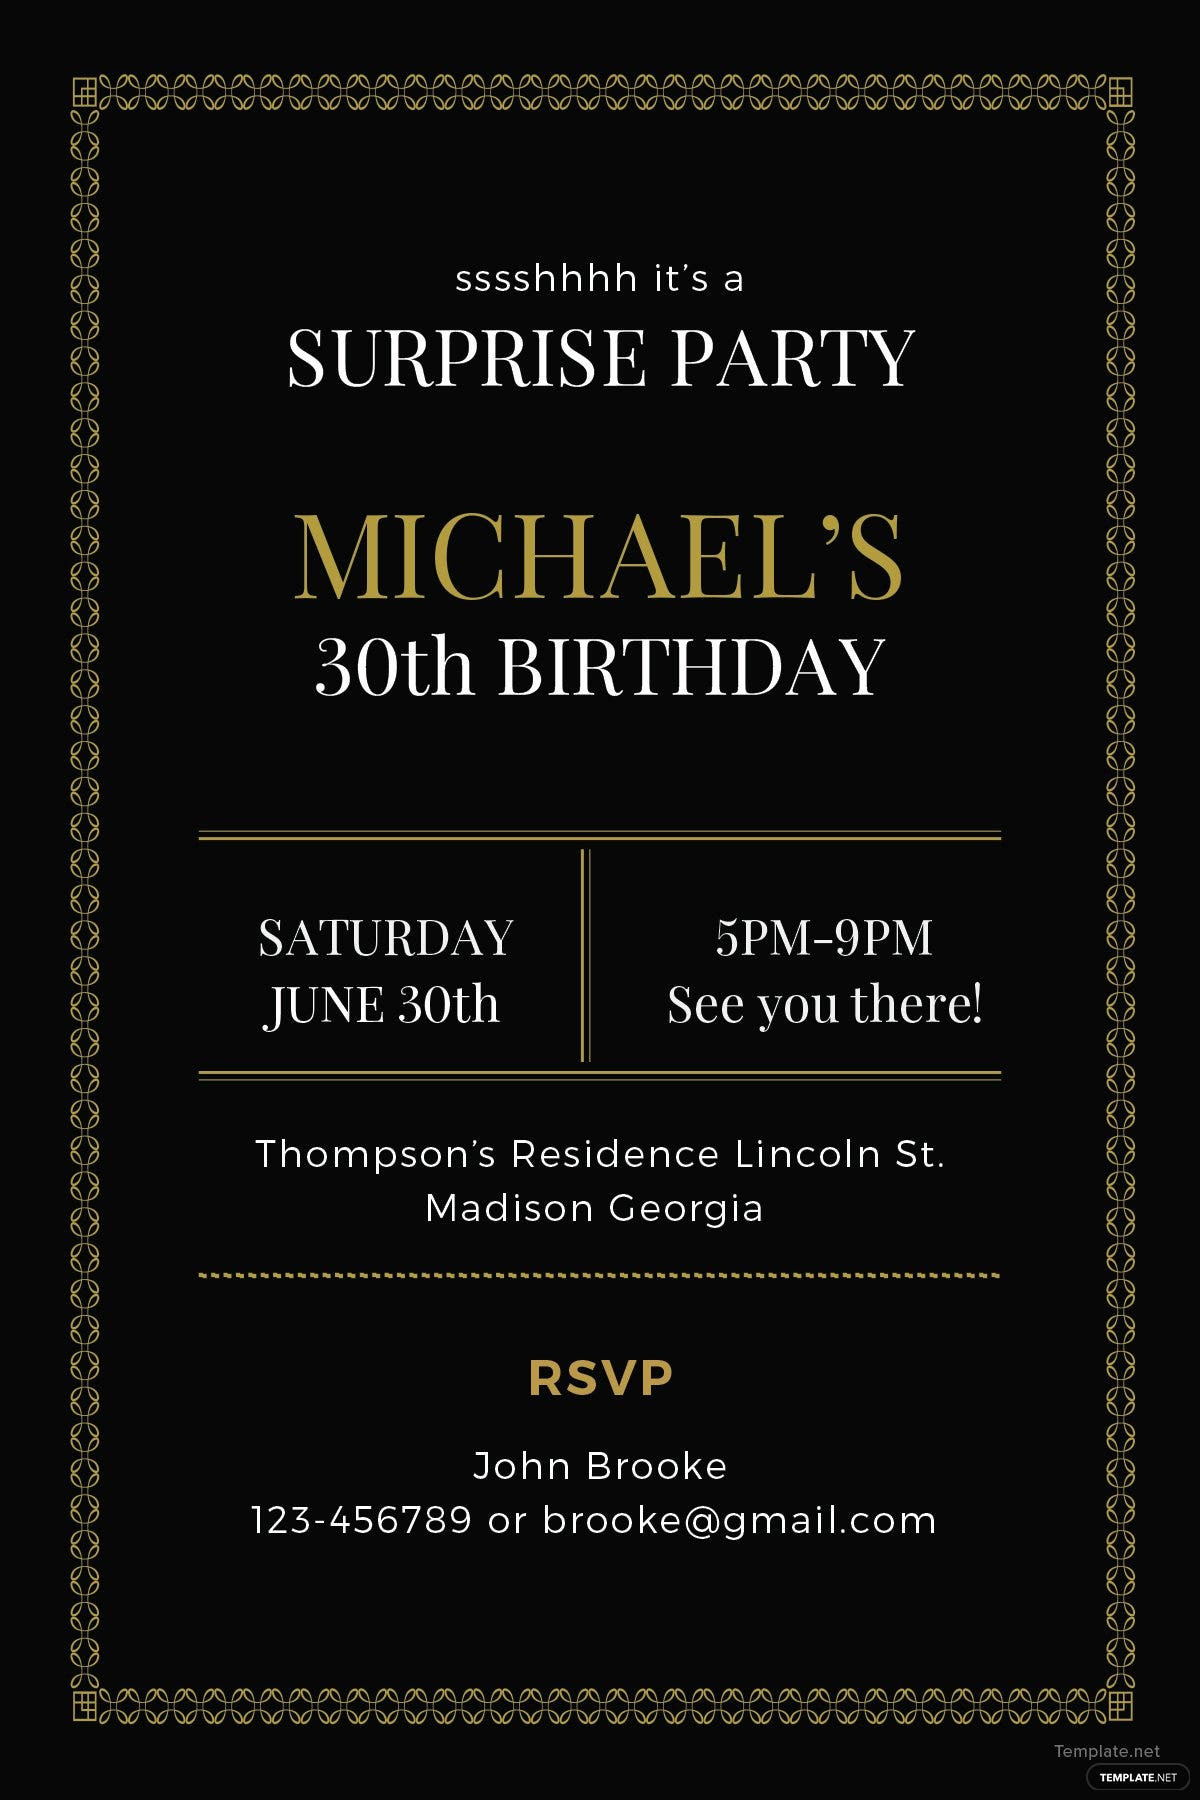 Surprise Birthday Invitation Templates
 Free Surprise Party Invitation Template in Adobe